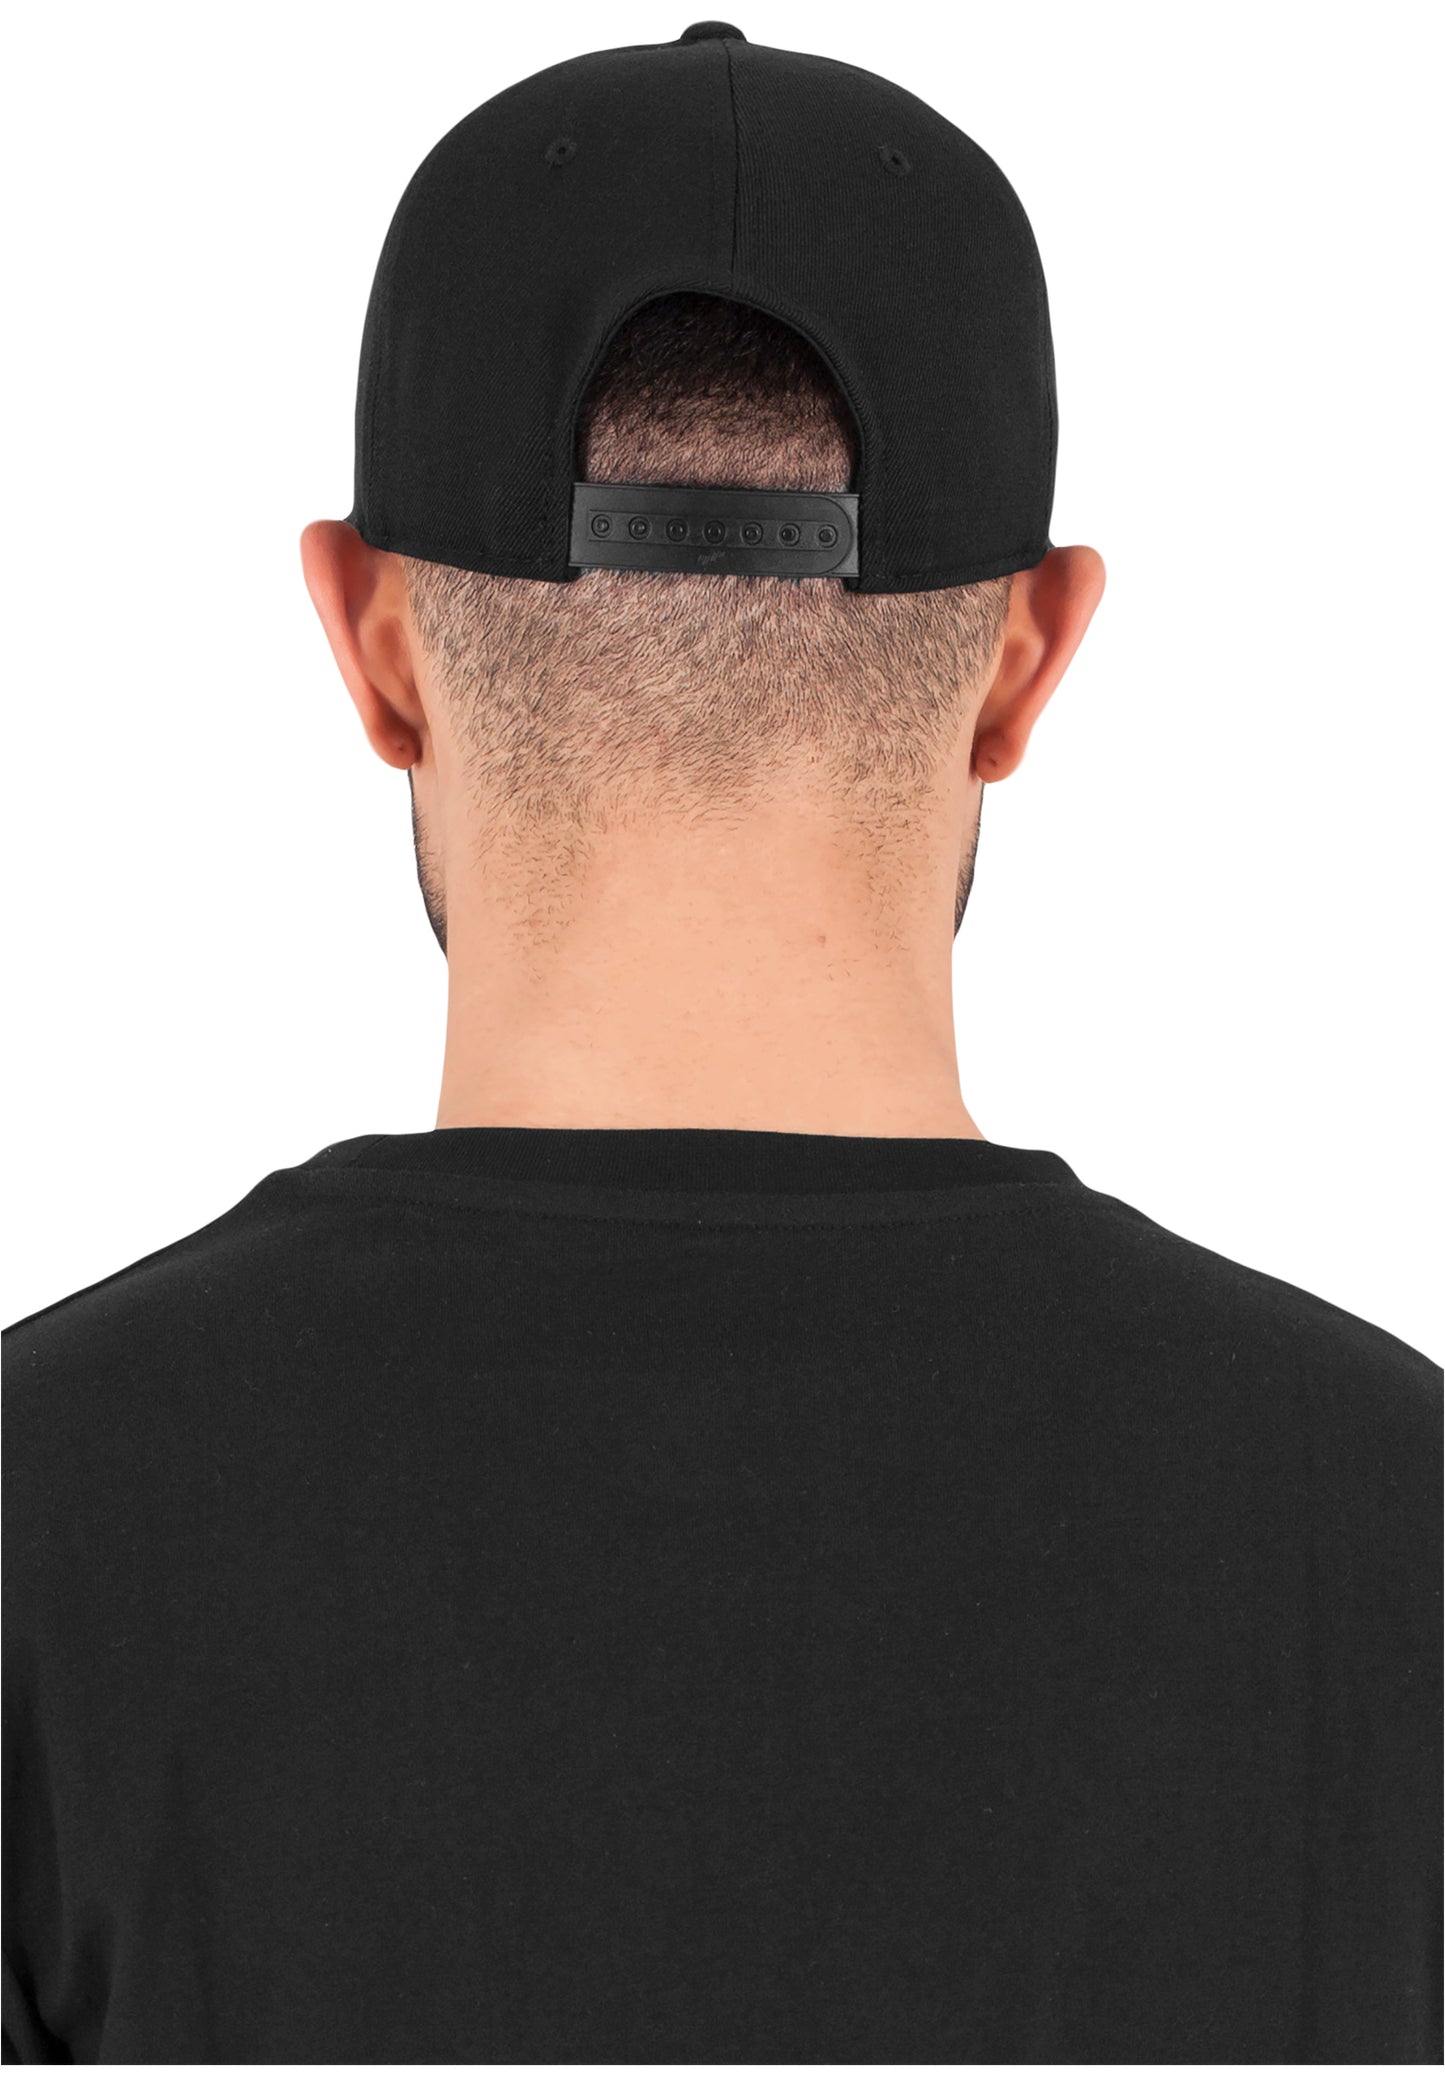 Premium One Ten Snapback - Black - Headz Up 